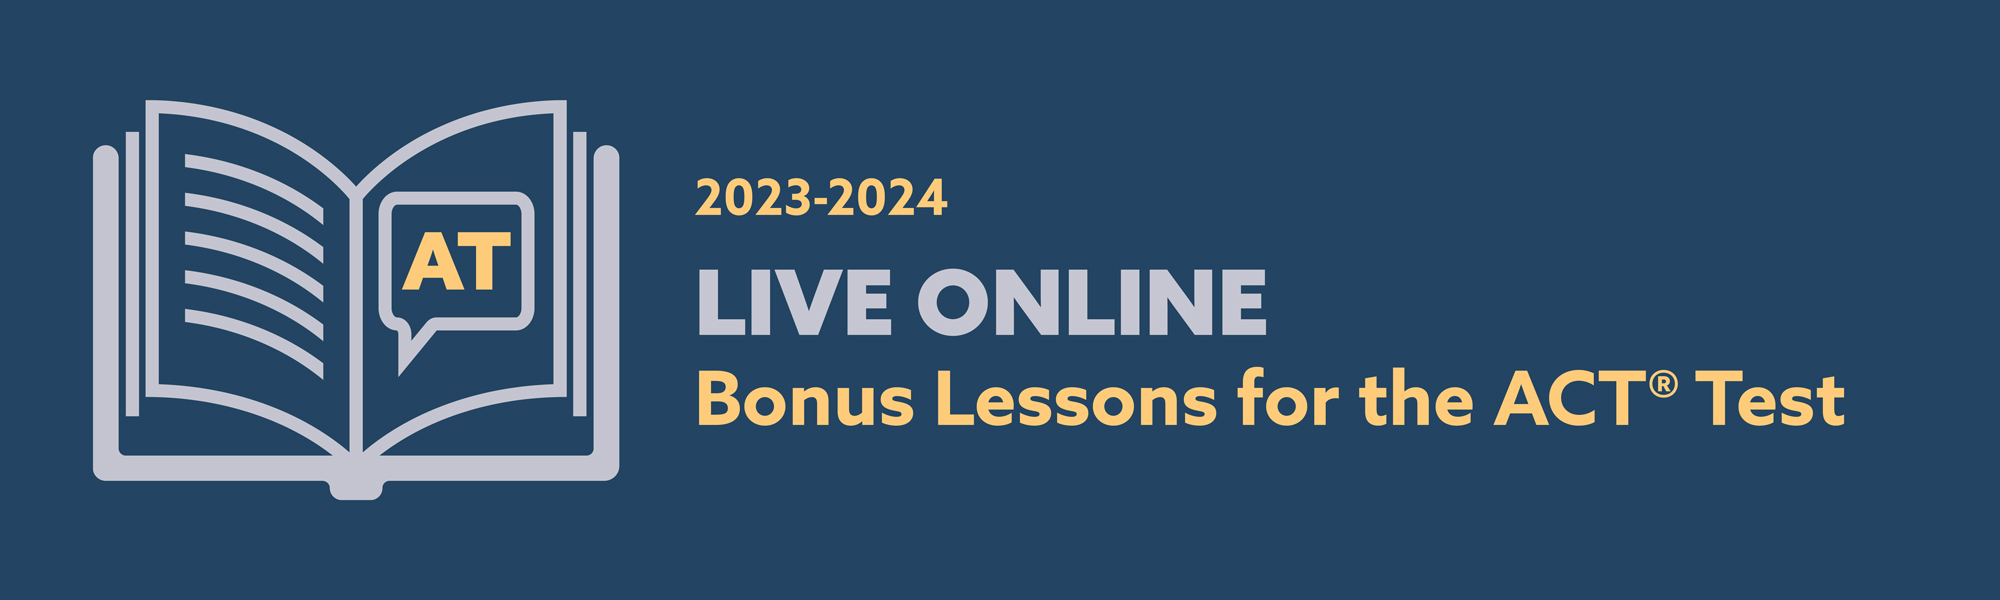 Bonus Lessons for the ACT® Test – Live Online 2023-2024